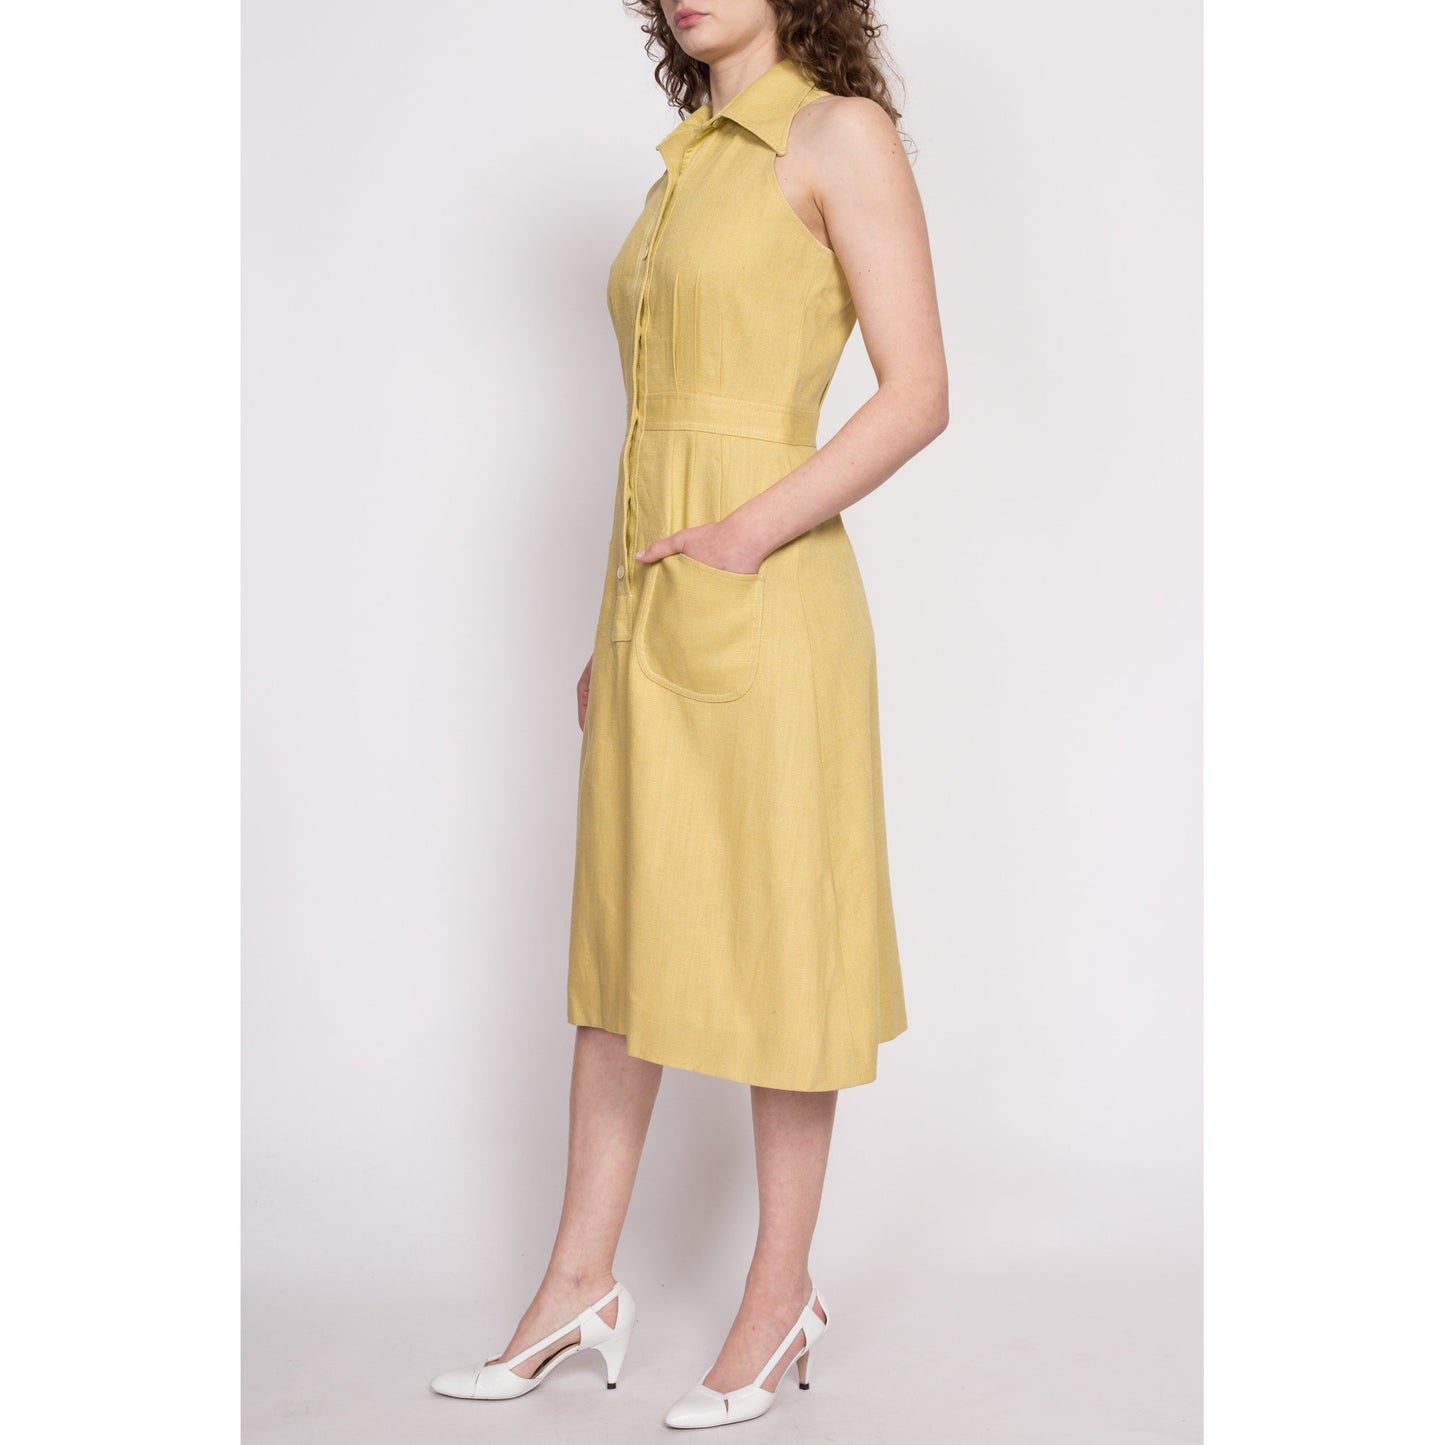 70s Mustard Yellow Linen Racerback Dress - Medium | Vintage Button Up Sleeveless Pocket Midi Dress